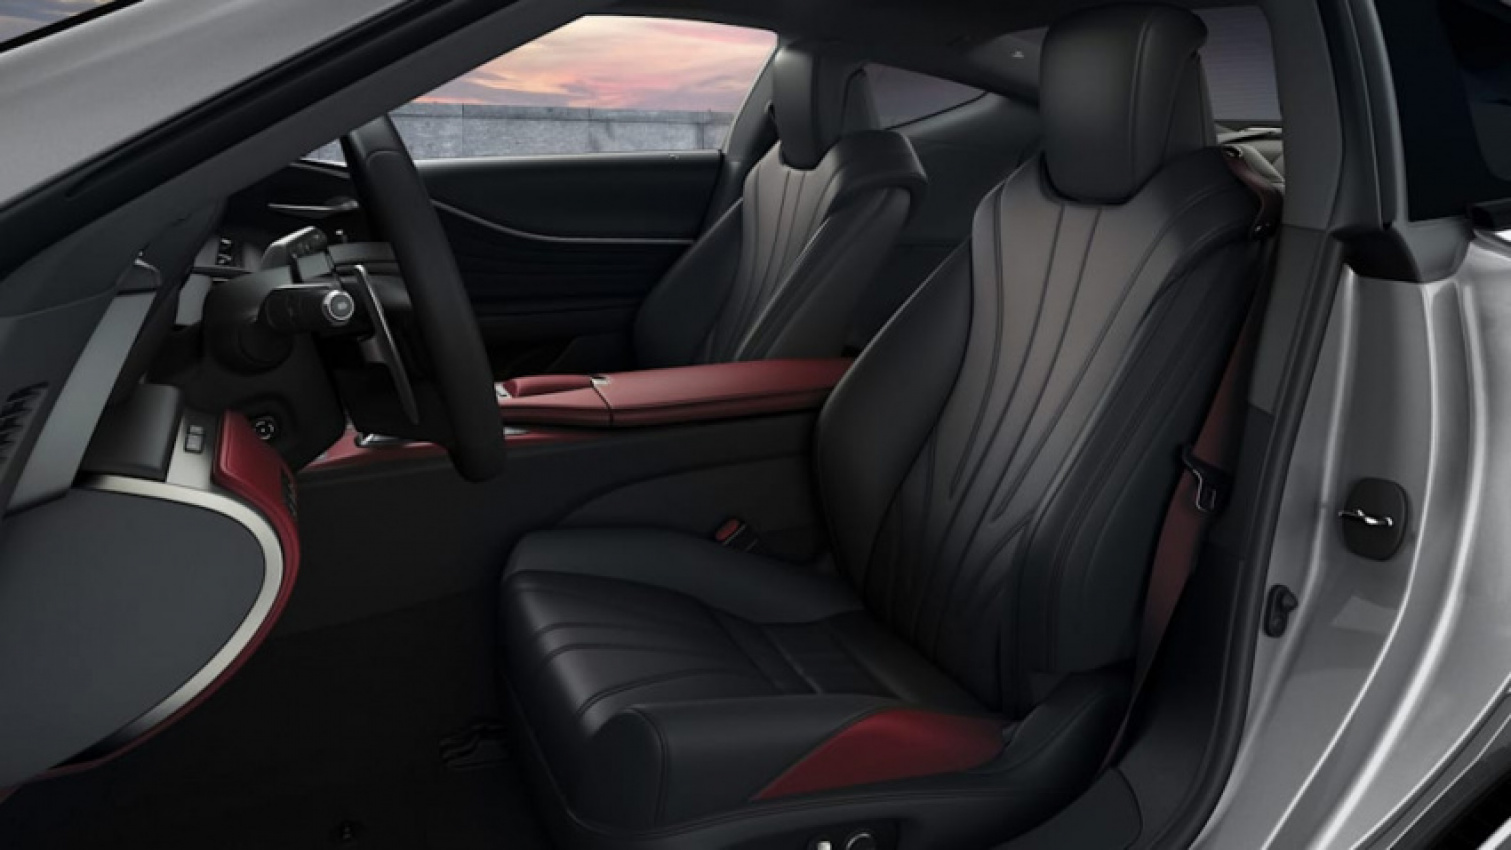 autos, cars, lexus, convertible, coupe, luxury, performance, 2022 lexus lc 500 inspiration series gets red accents, unique wheels